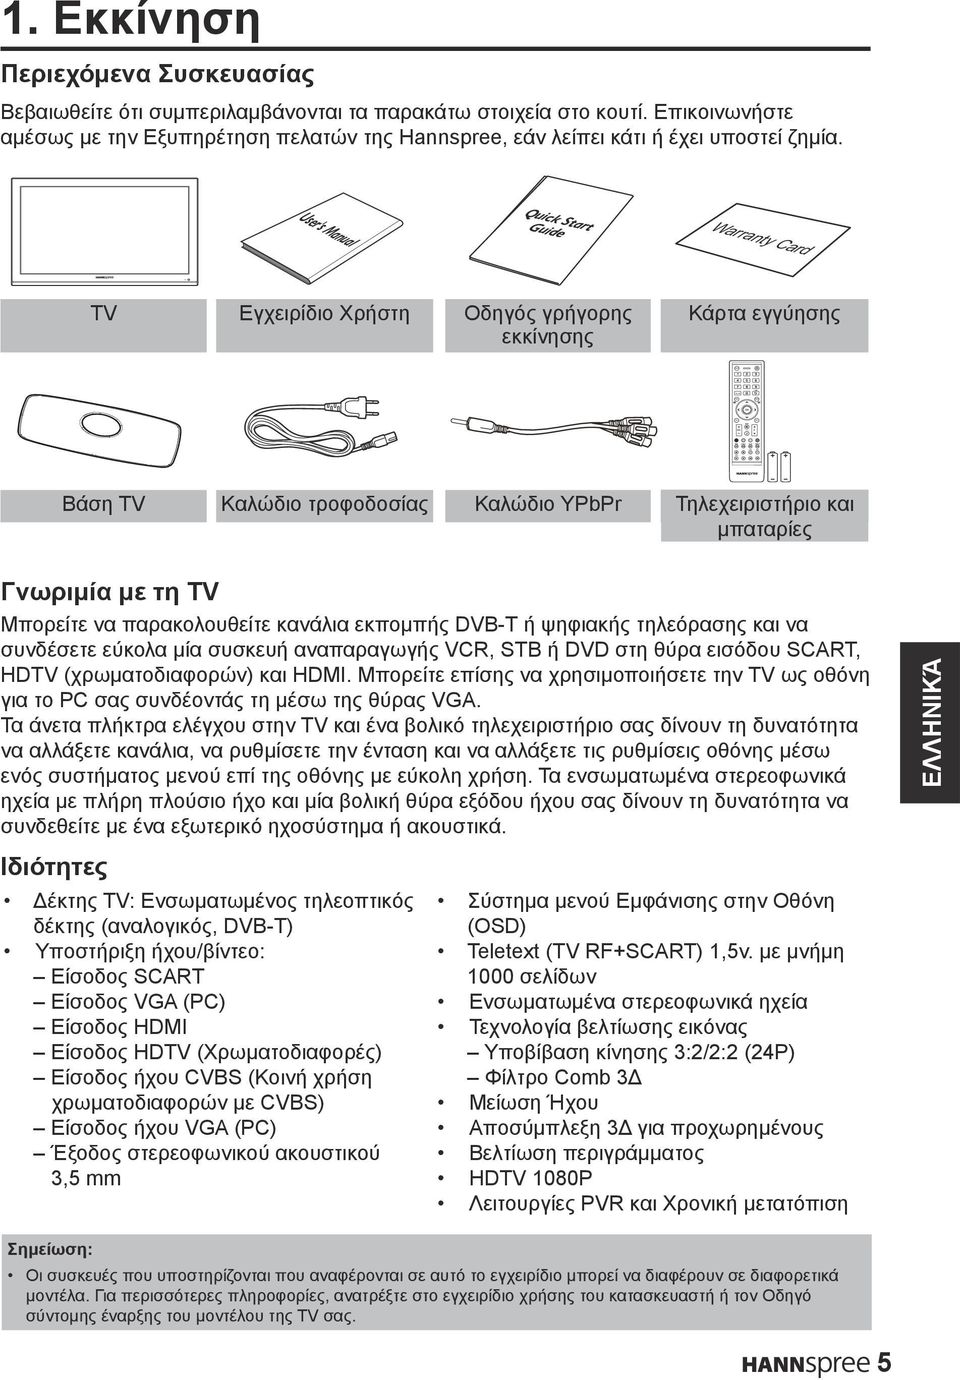 User's Manual Quick Start Guide TV Εγχειρίδιο Χρήστη Οδηγός γρήγορης εκκίνησης Κάρτα εγγύησης Βάση TV Καλώδιο τροφοδοσίας Καλώδιο YPbPr Τηλεχειριστήριο και μπαταρίες Γνωριμία με τη TV Μπορείτε να